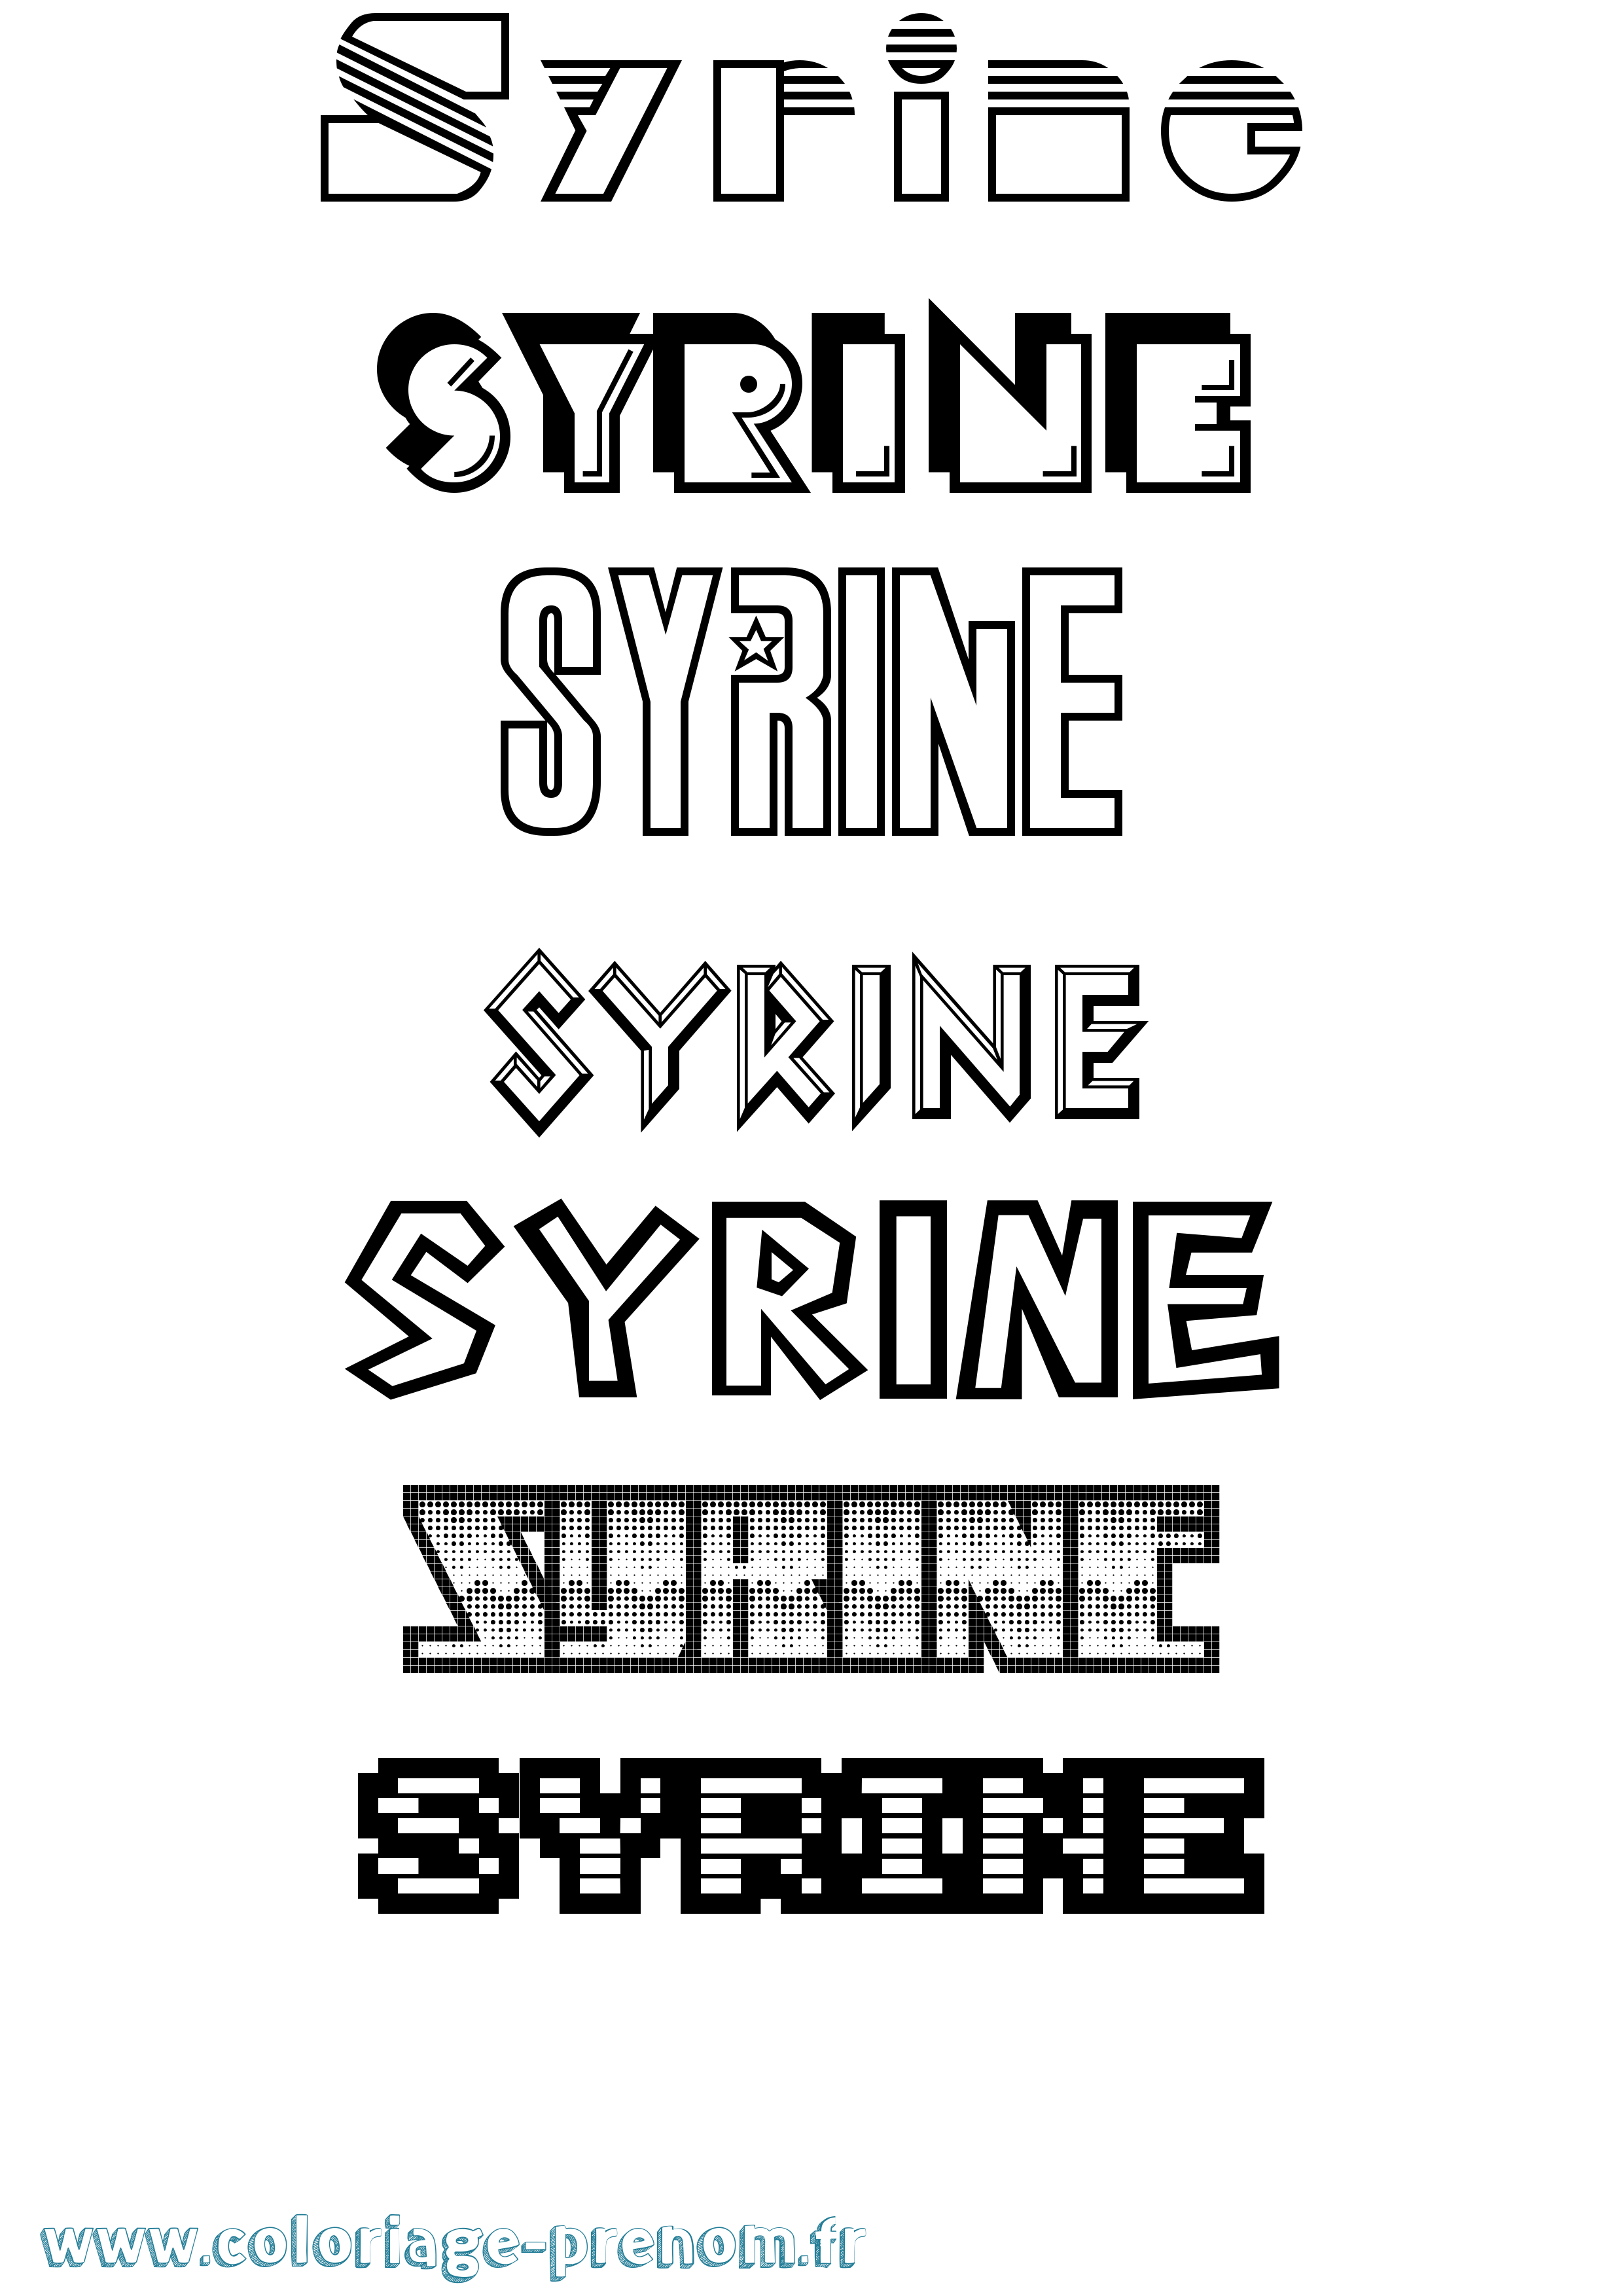 Coloriage prénom Syrine